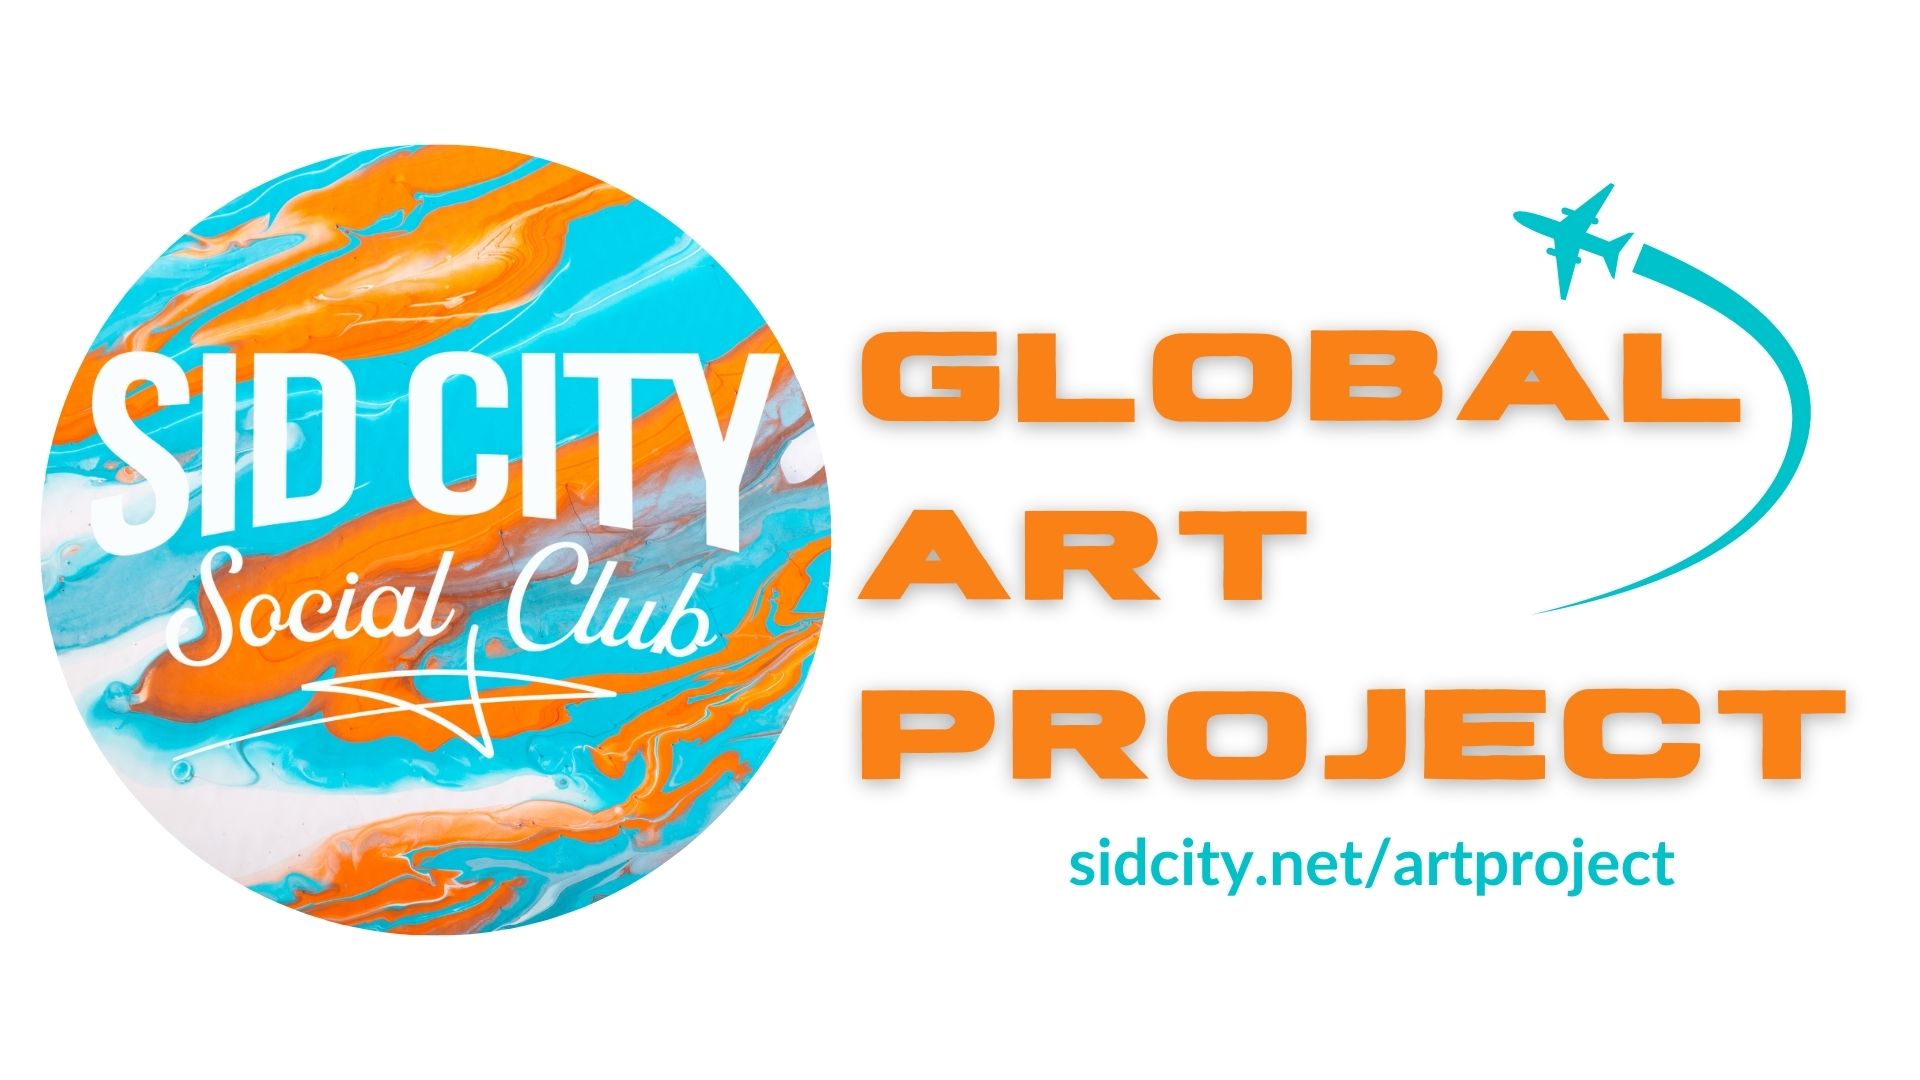 Sid City Social Club Global Art Project